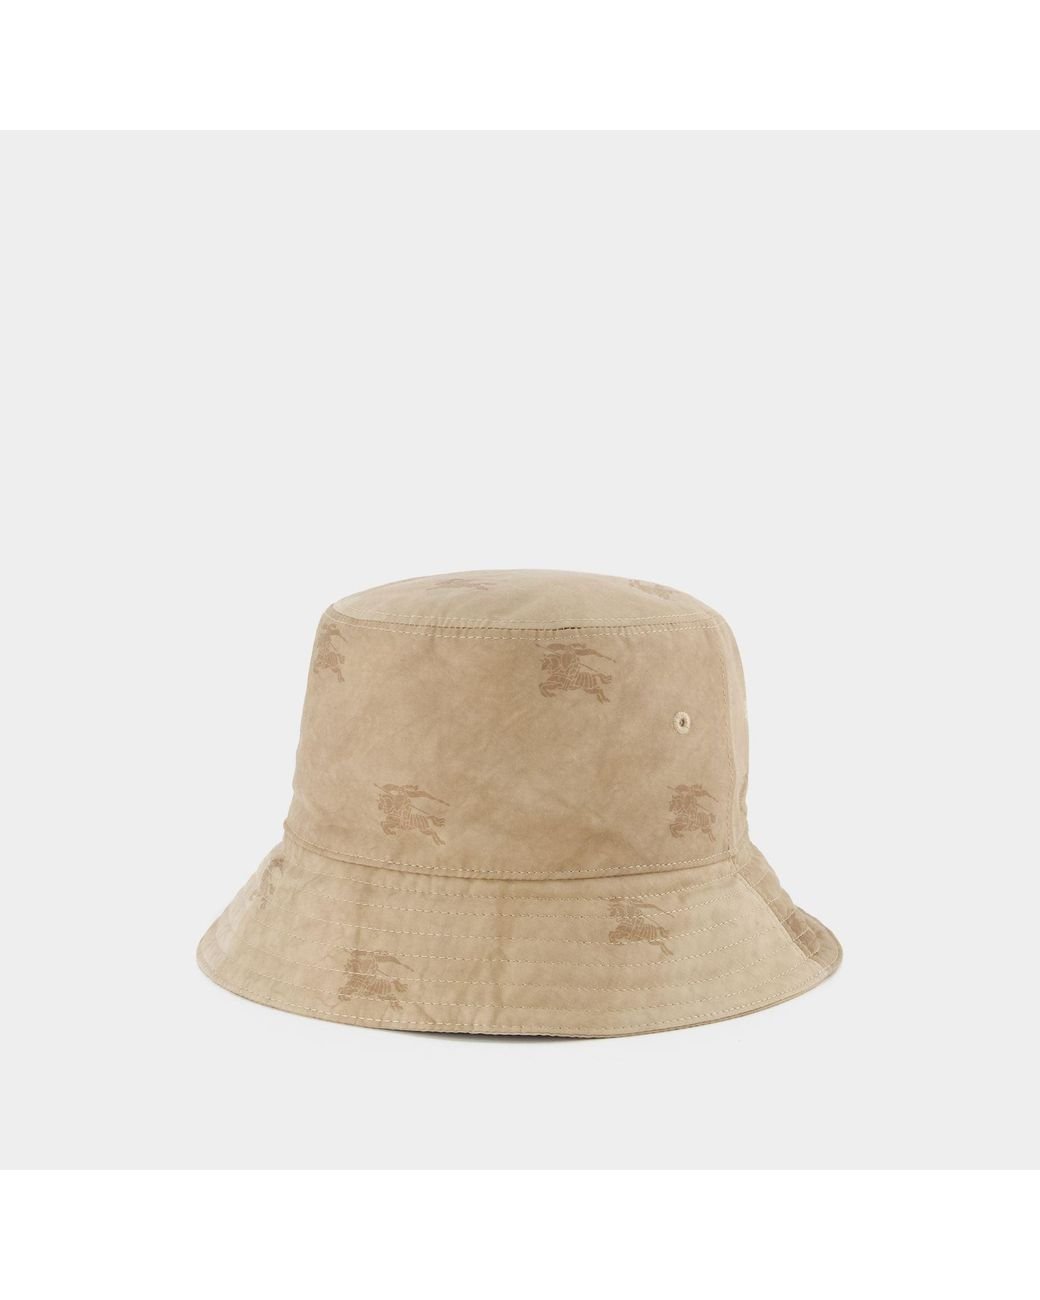 Mh 2 Panel Hat - Burberry - Beige - Cotton